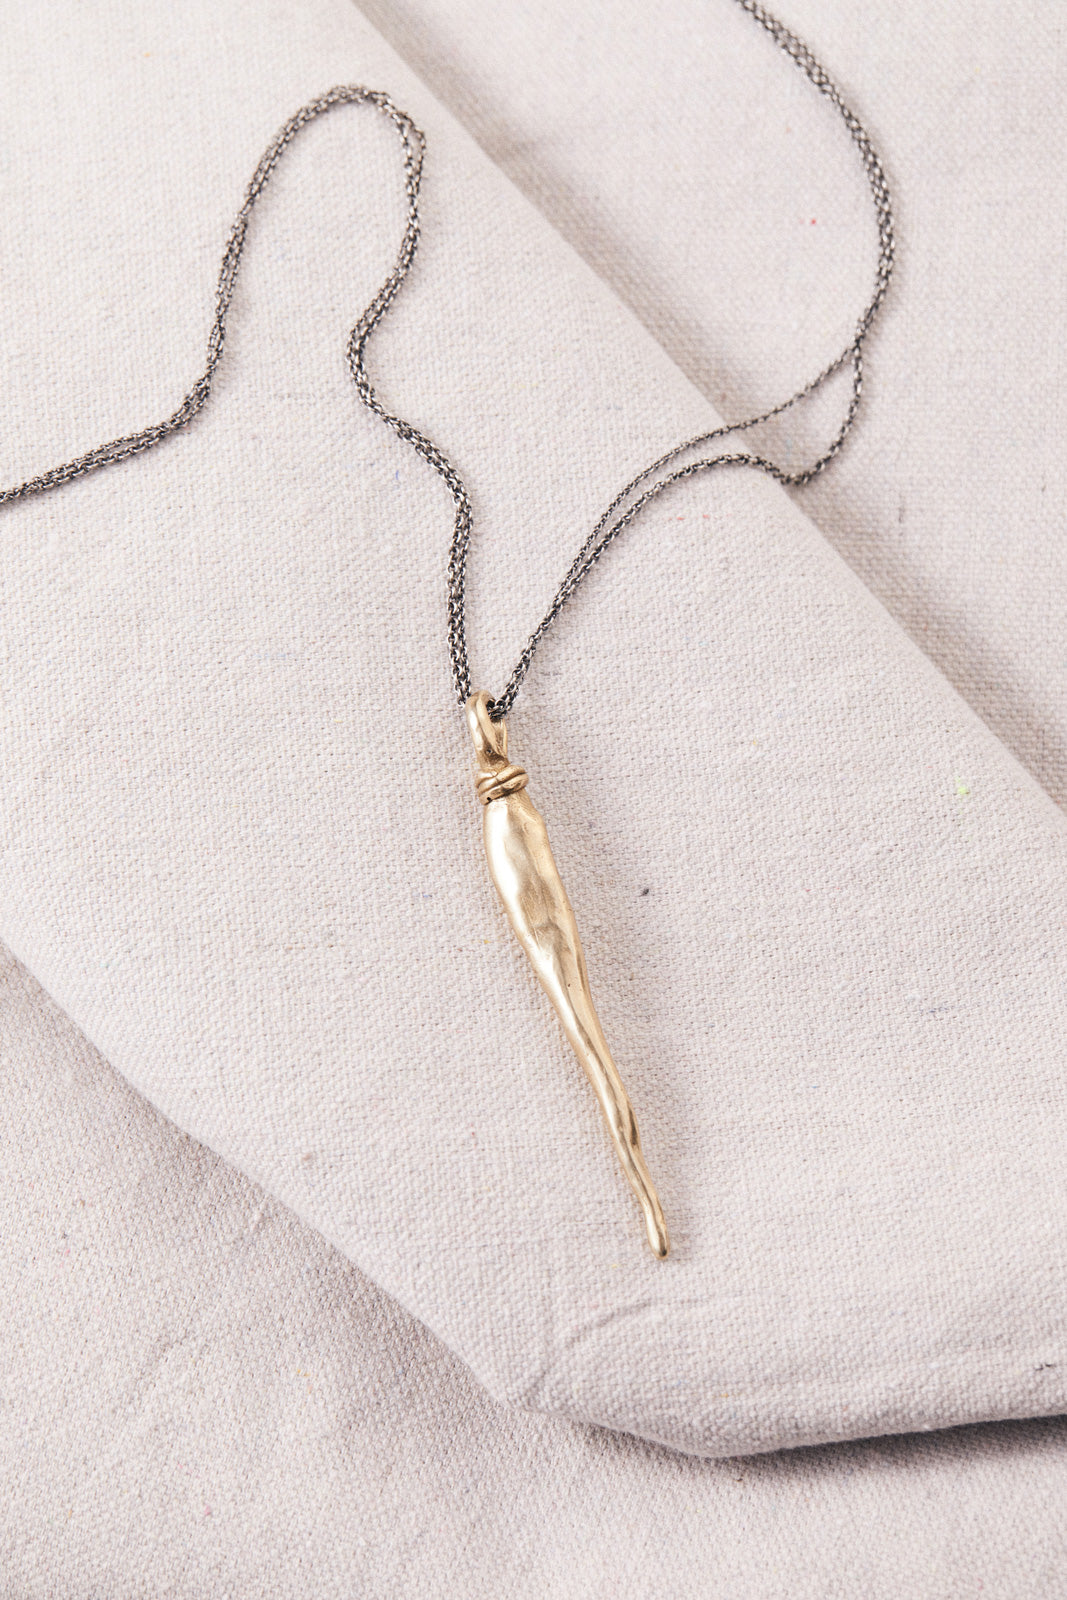 Wrap detail point pendant Sabratha Necklace by Kristen Mara